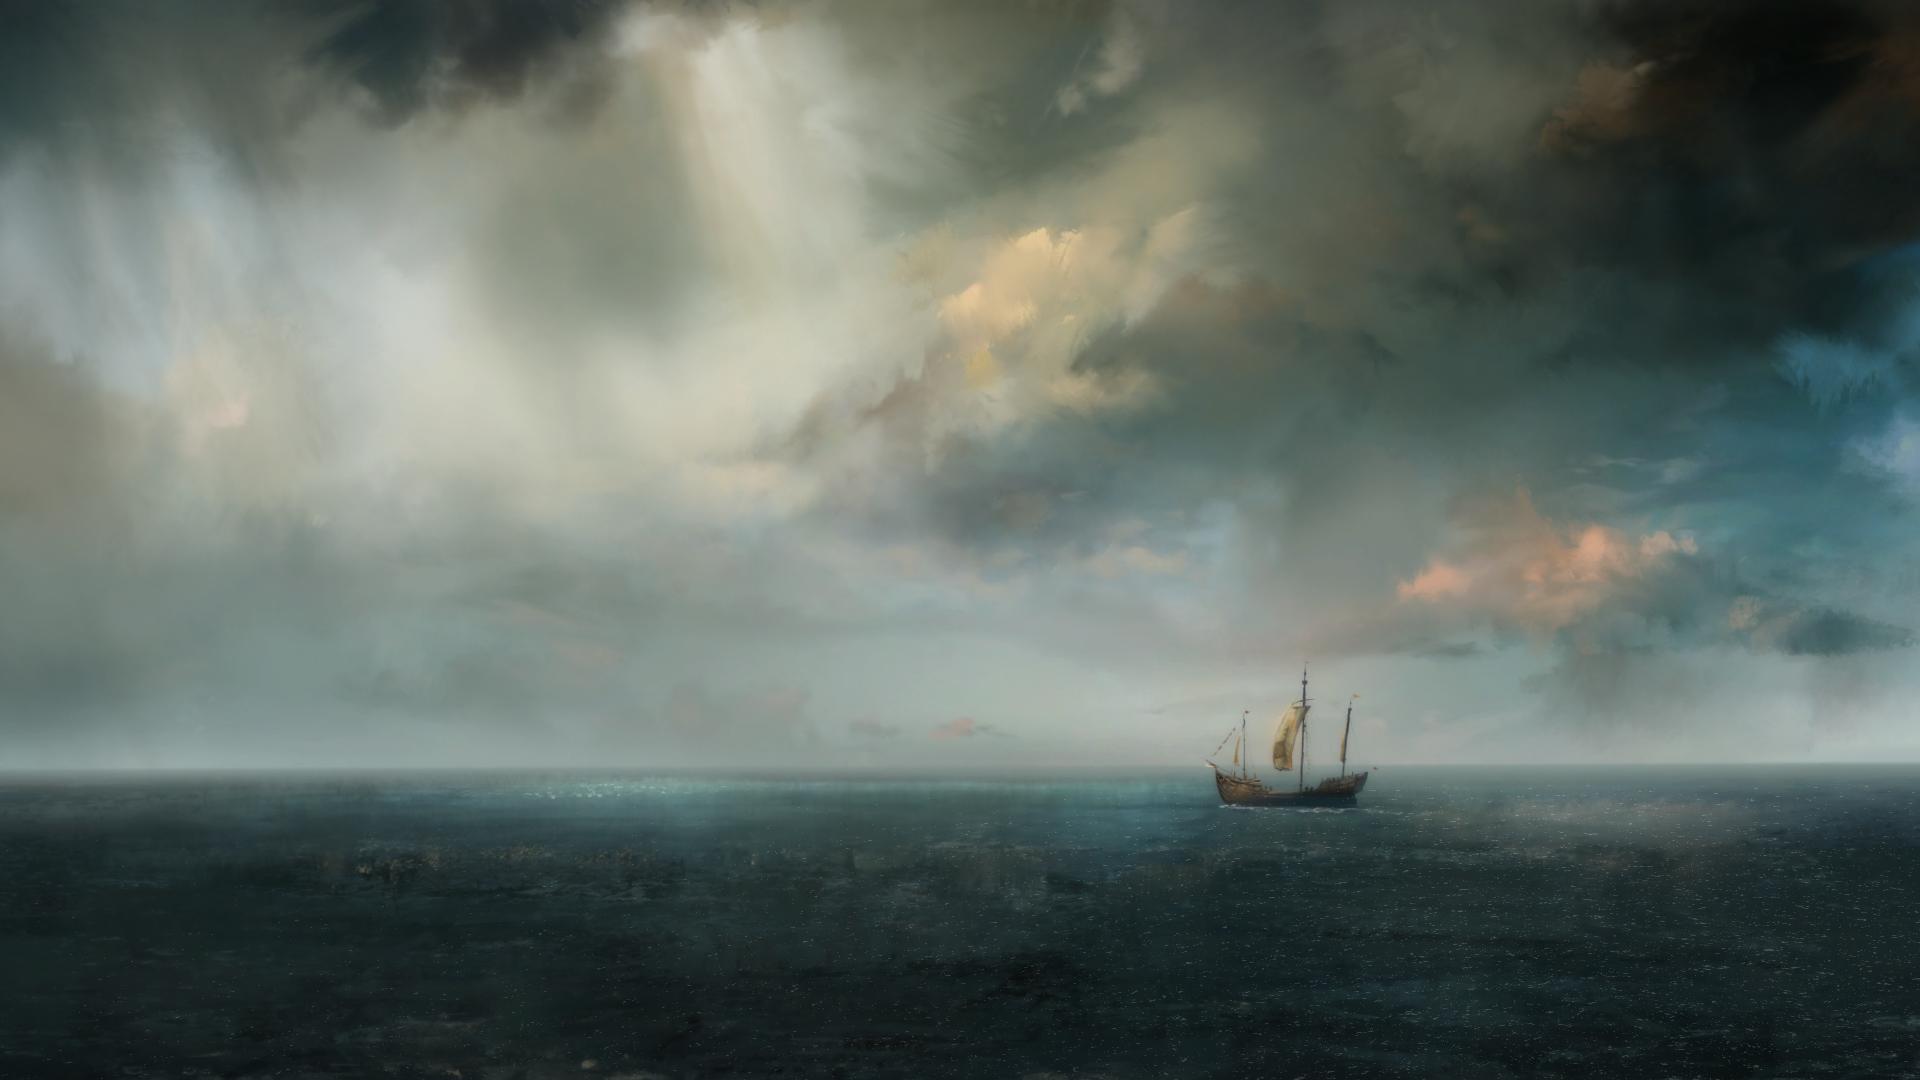 Narrow Sea (Telltale Game of Thrones) [1920x1080]